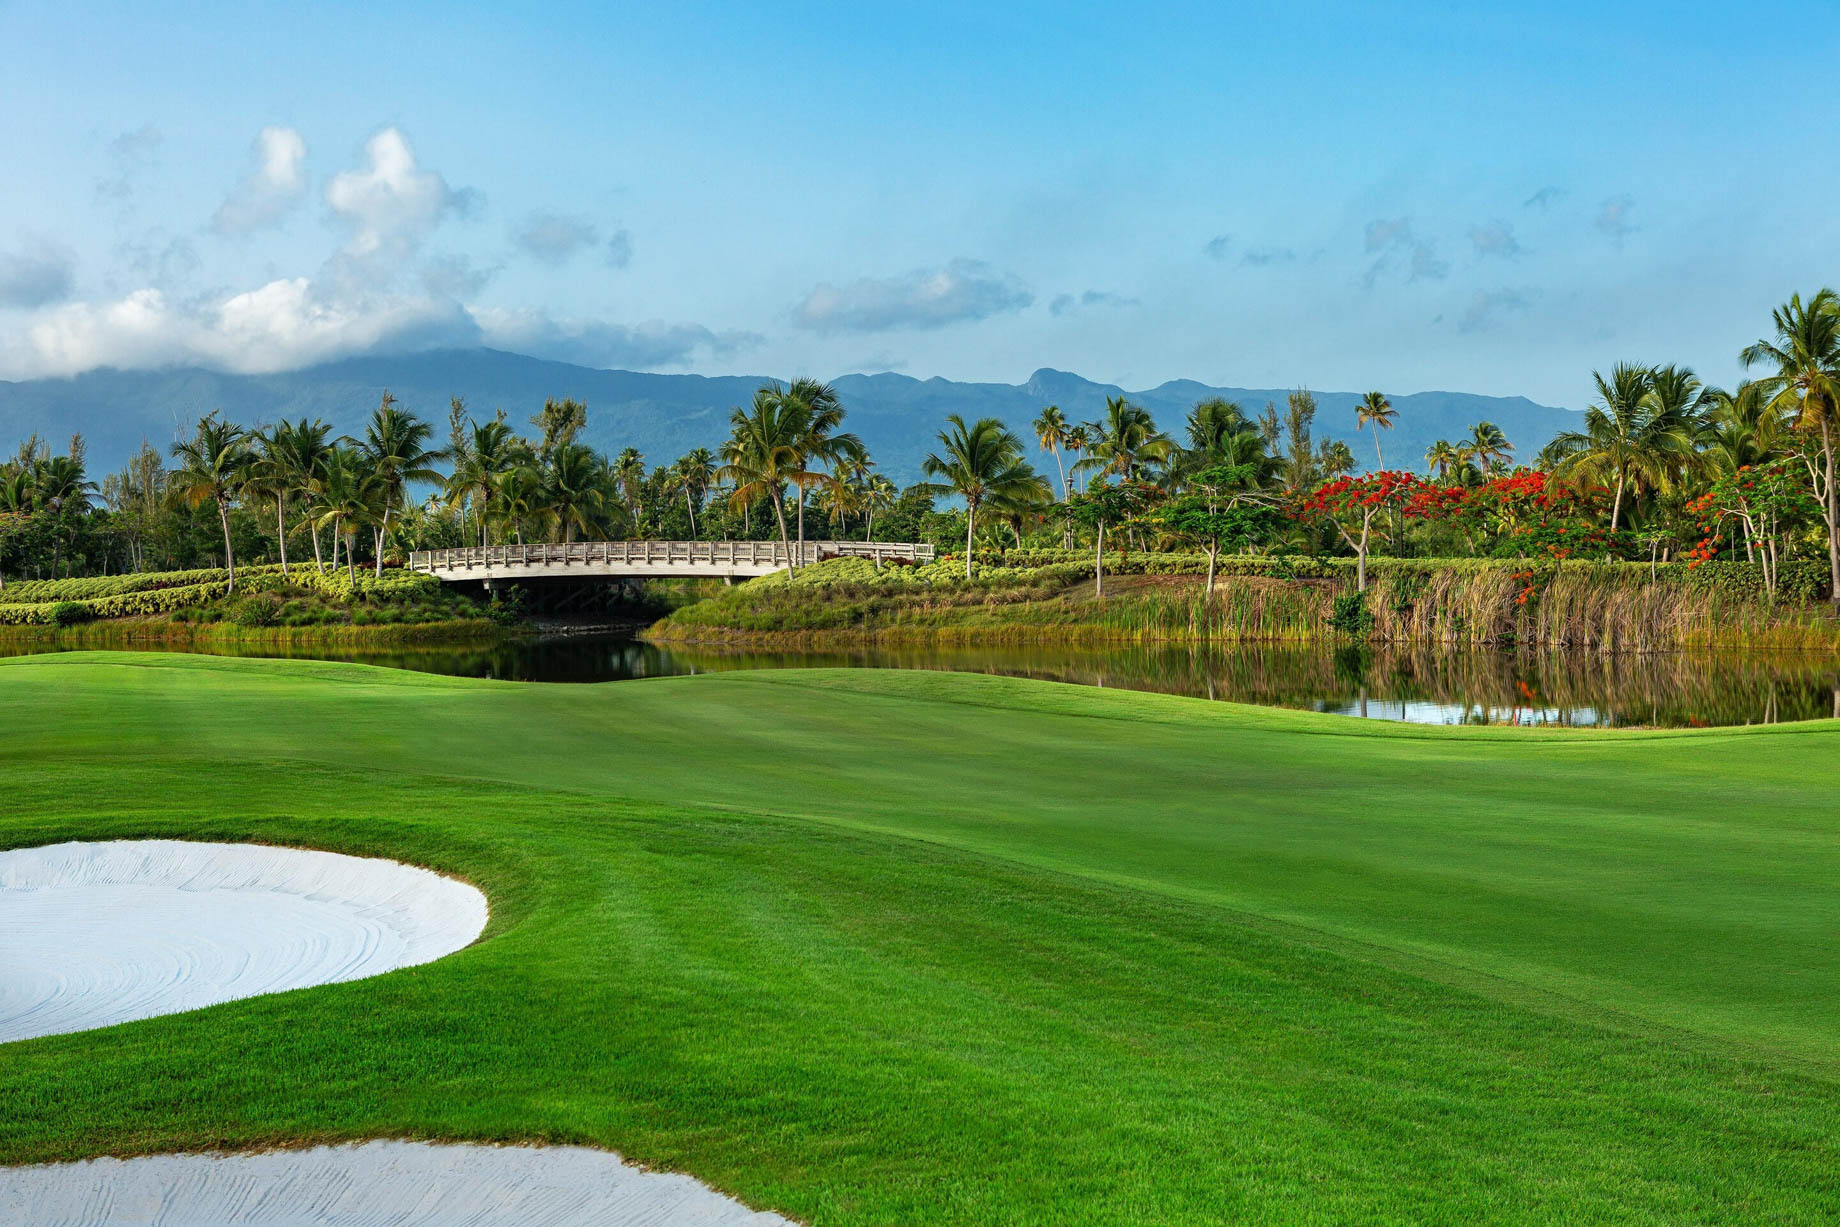 The St. Regis Bahia Beach Resort - Rio Grande, Puerto Rico - Golf Course